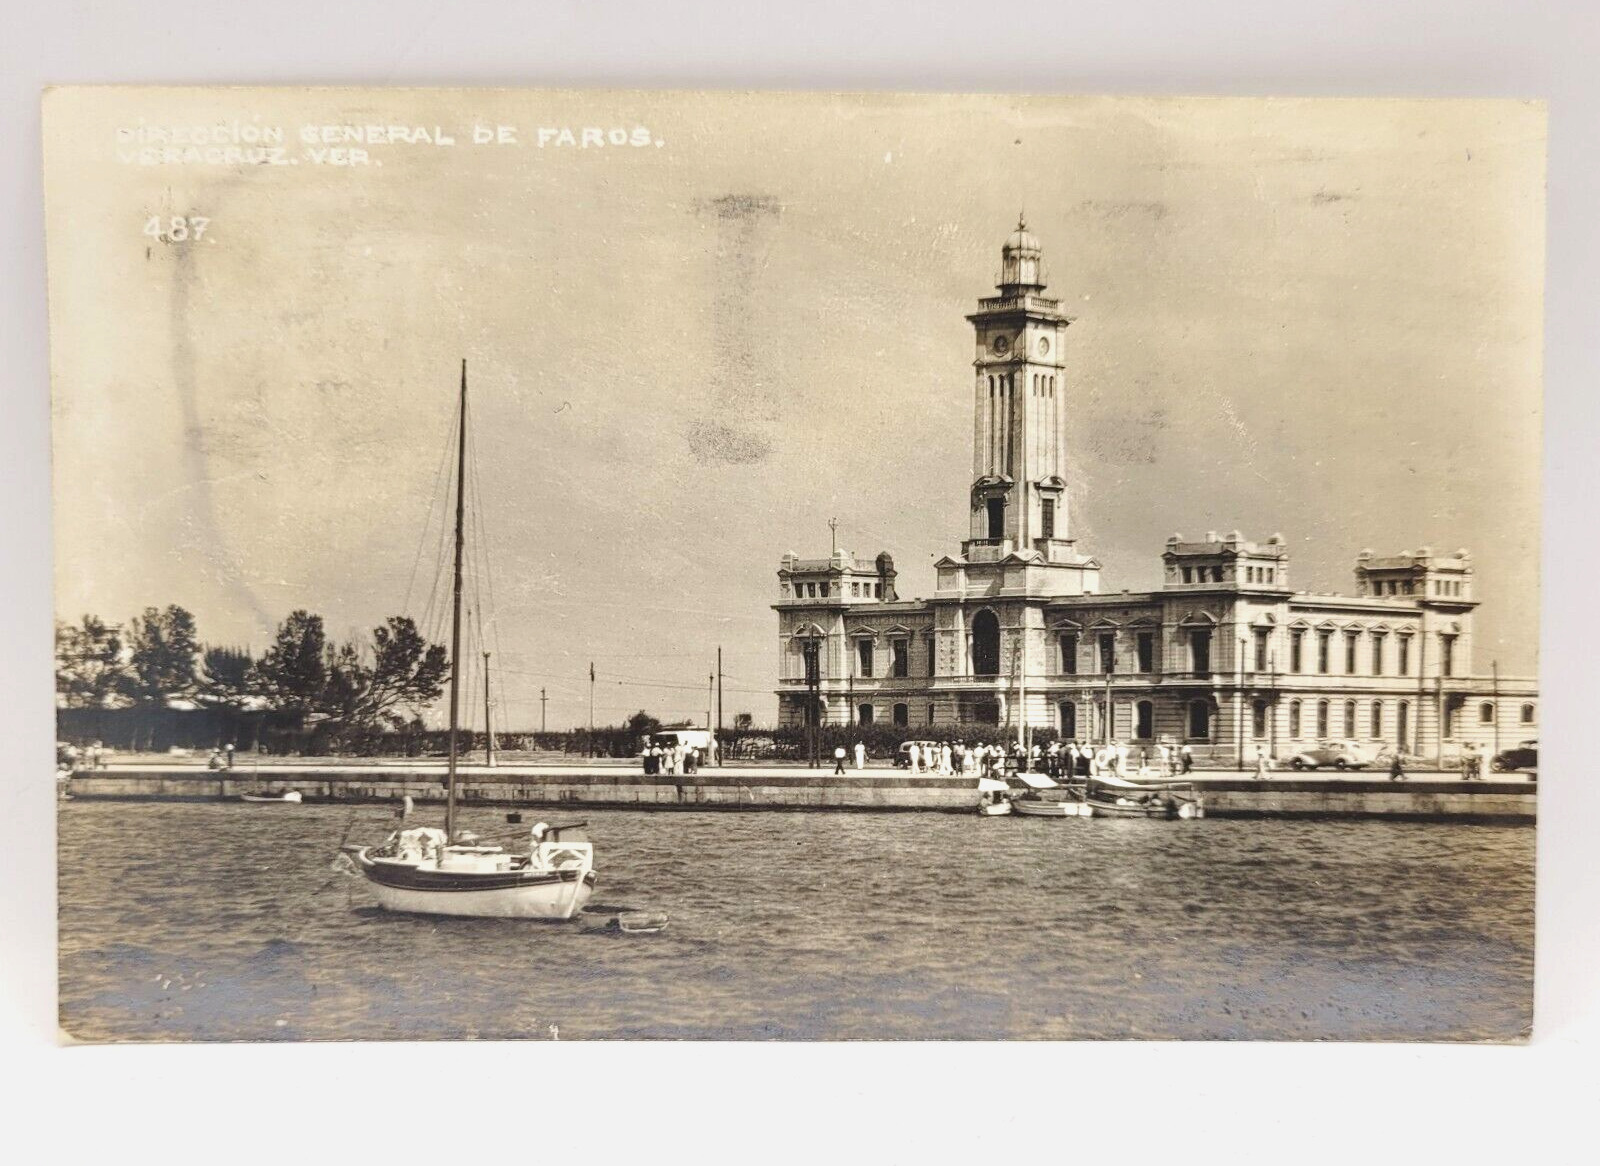 Vera Cruz Veracruz Mexico Lighthouse Waterside RPPC Postcard 1950s Cancel Stamp